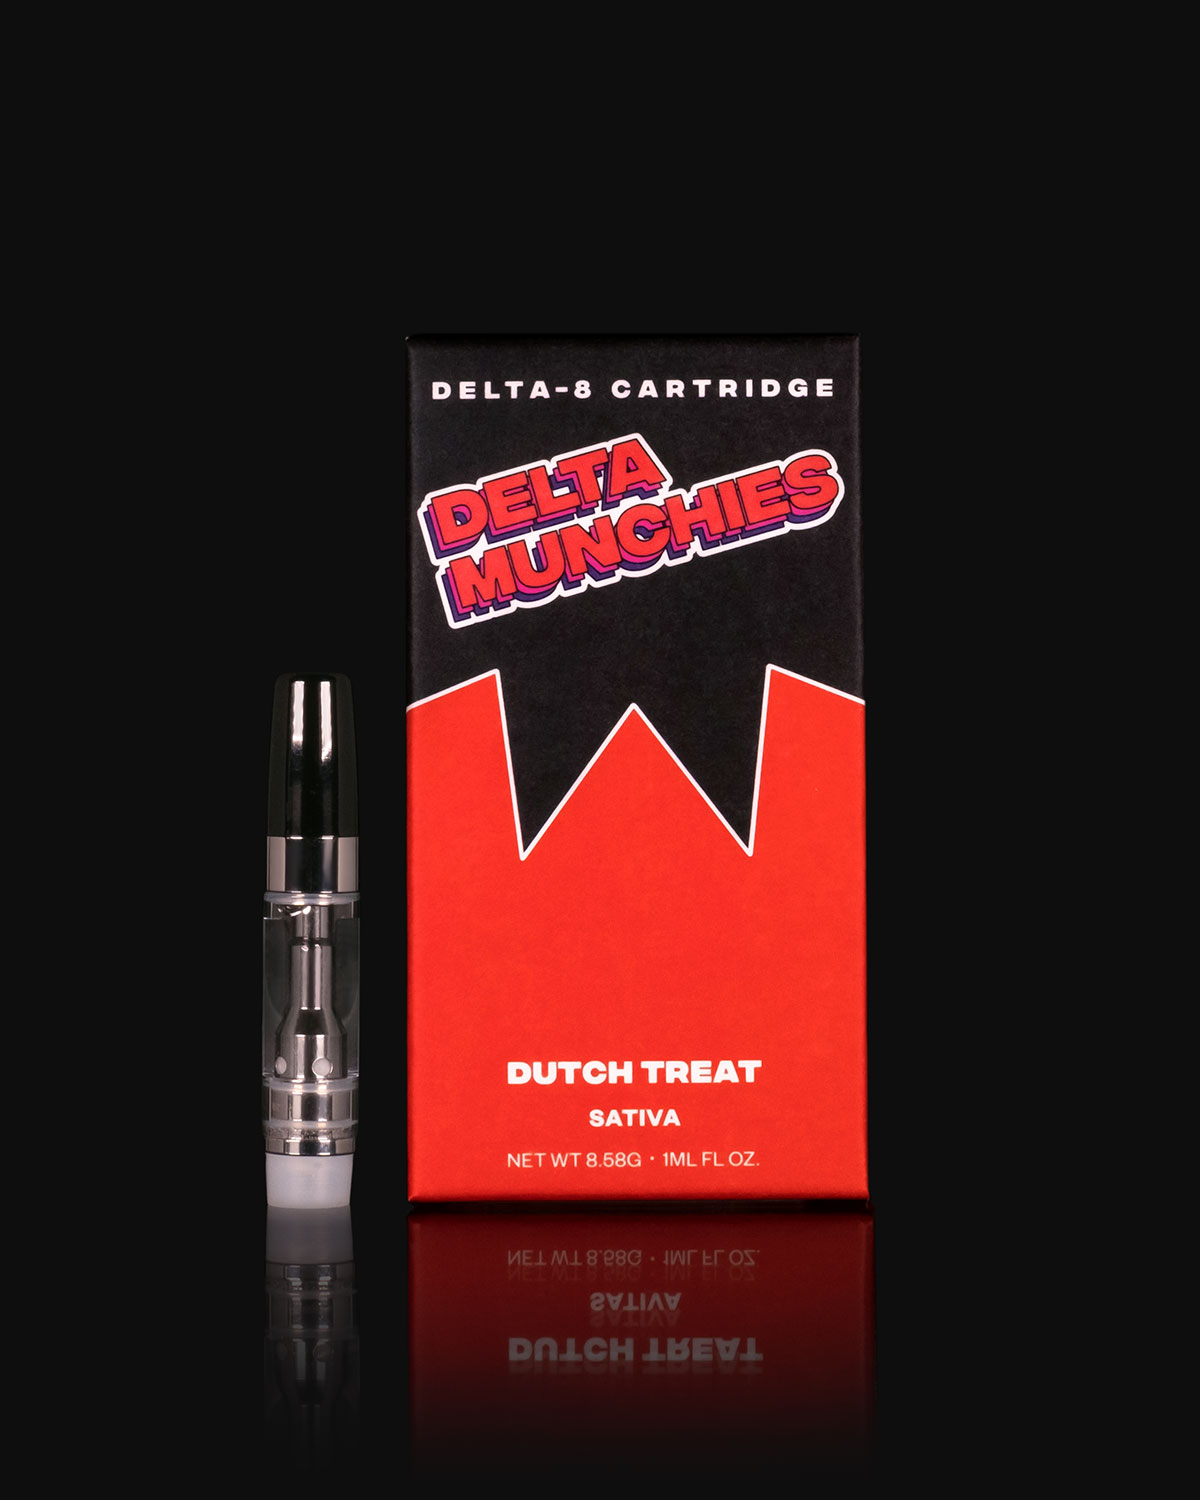 Delta Munchies dutch treat delta 8 vape cartridge product image